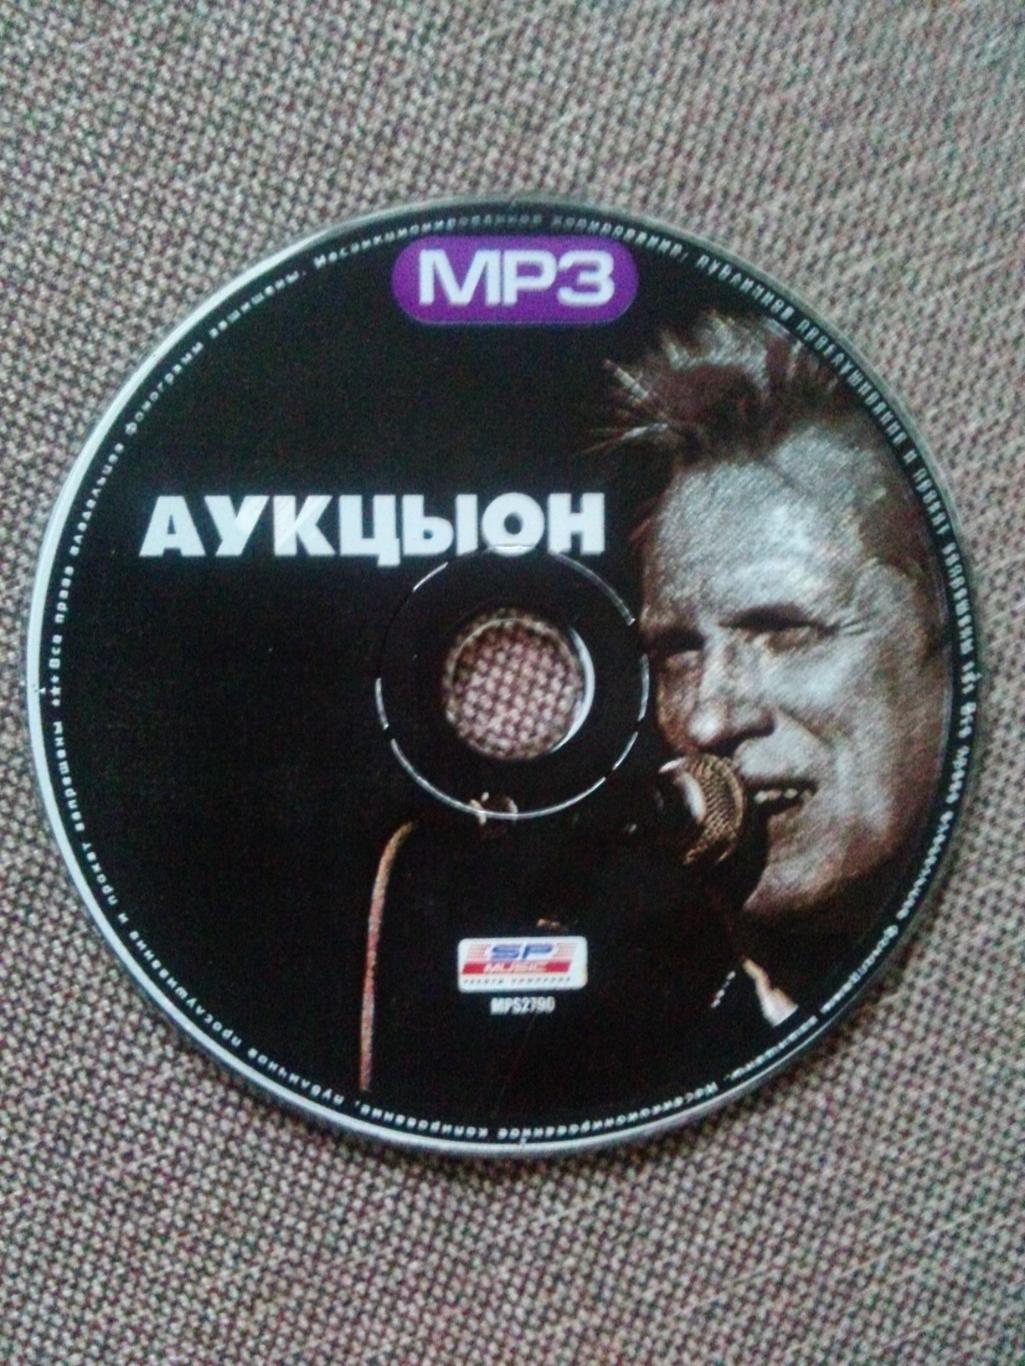 MP - 3 CD диск : группаАукцыон13 альбомов (Русская рок - музыка) 2